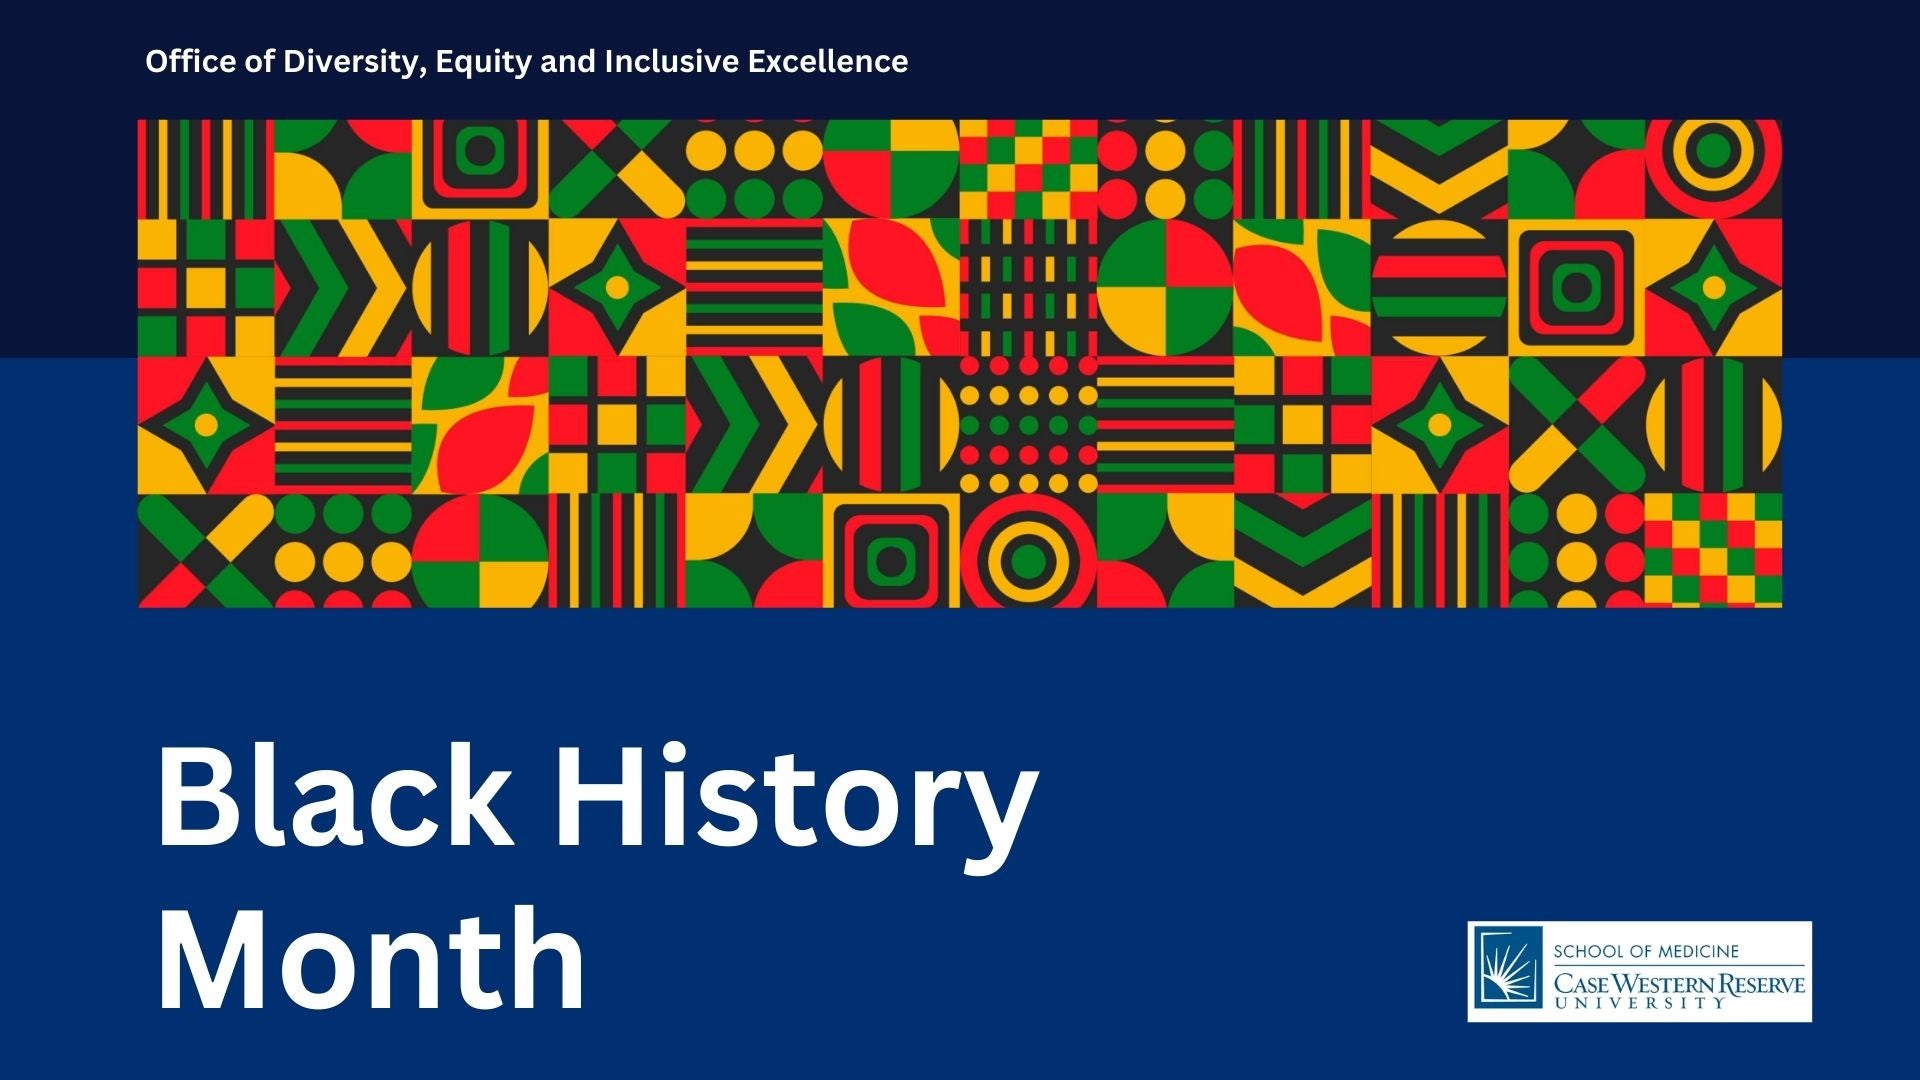 February: Black History Month